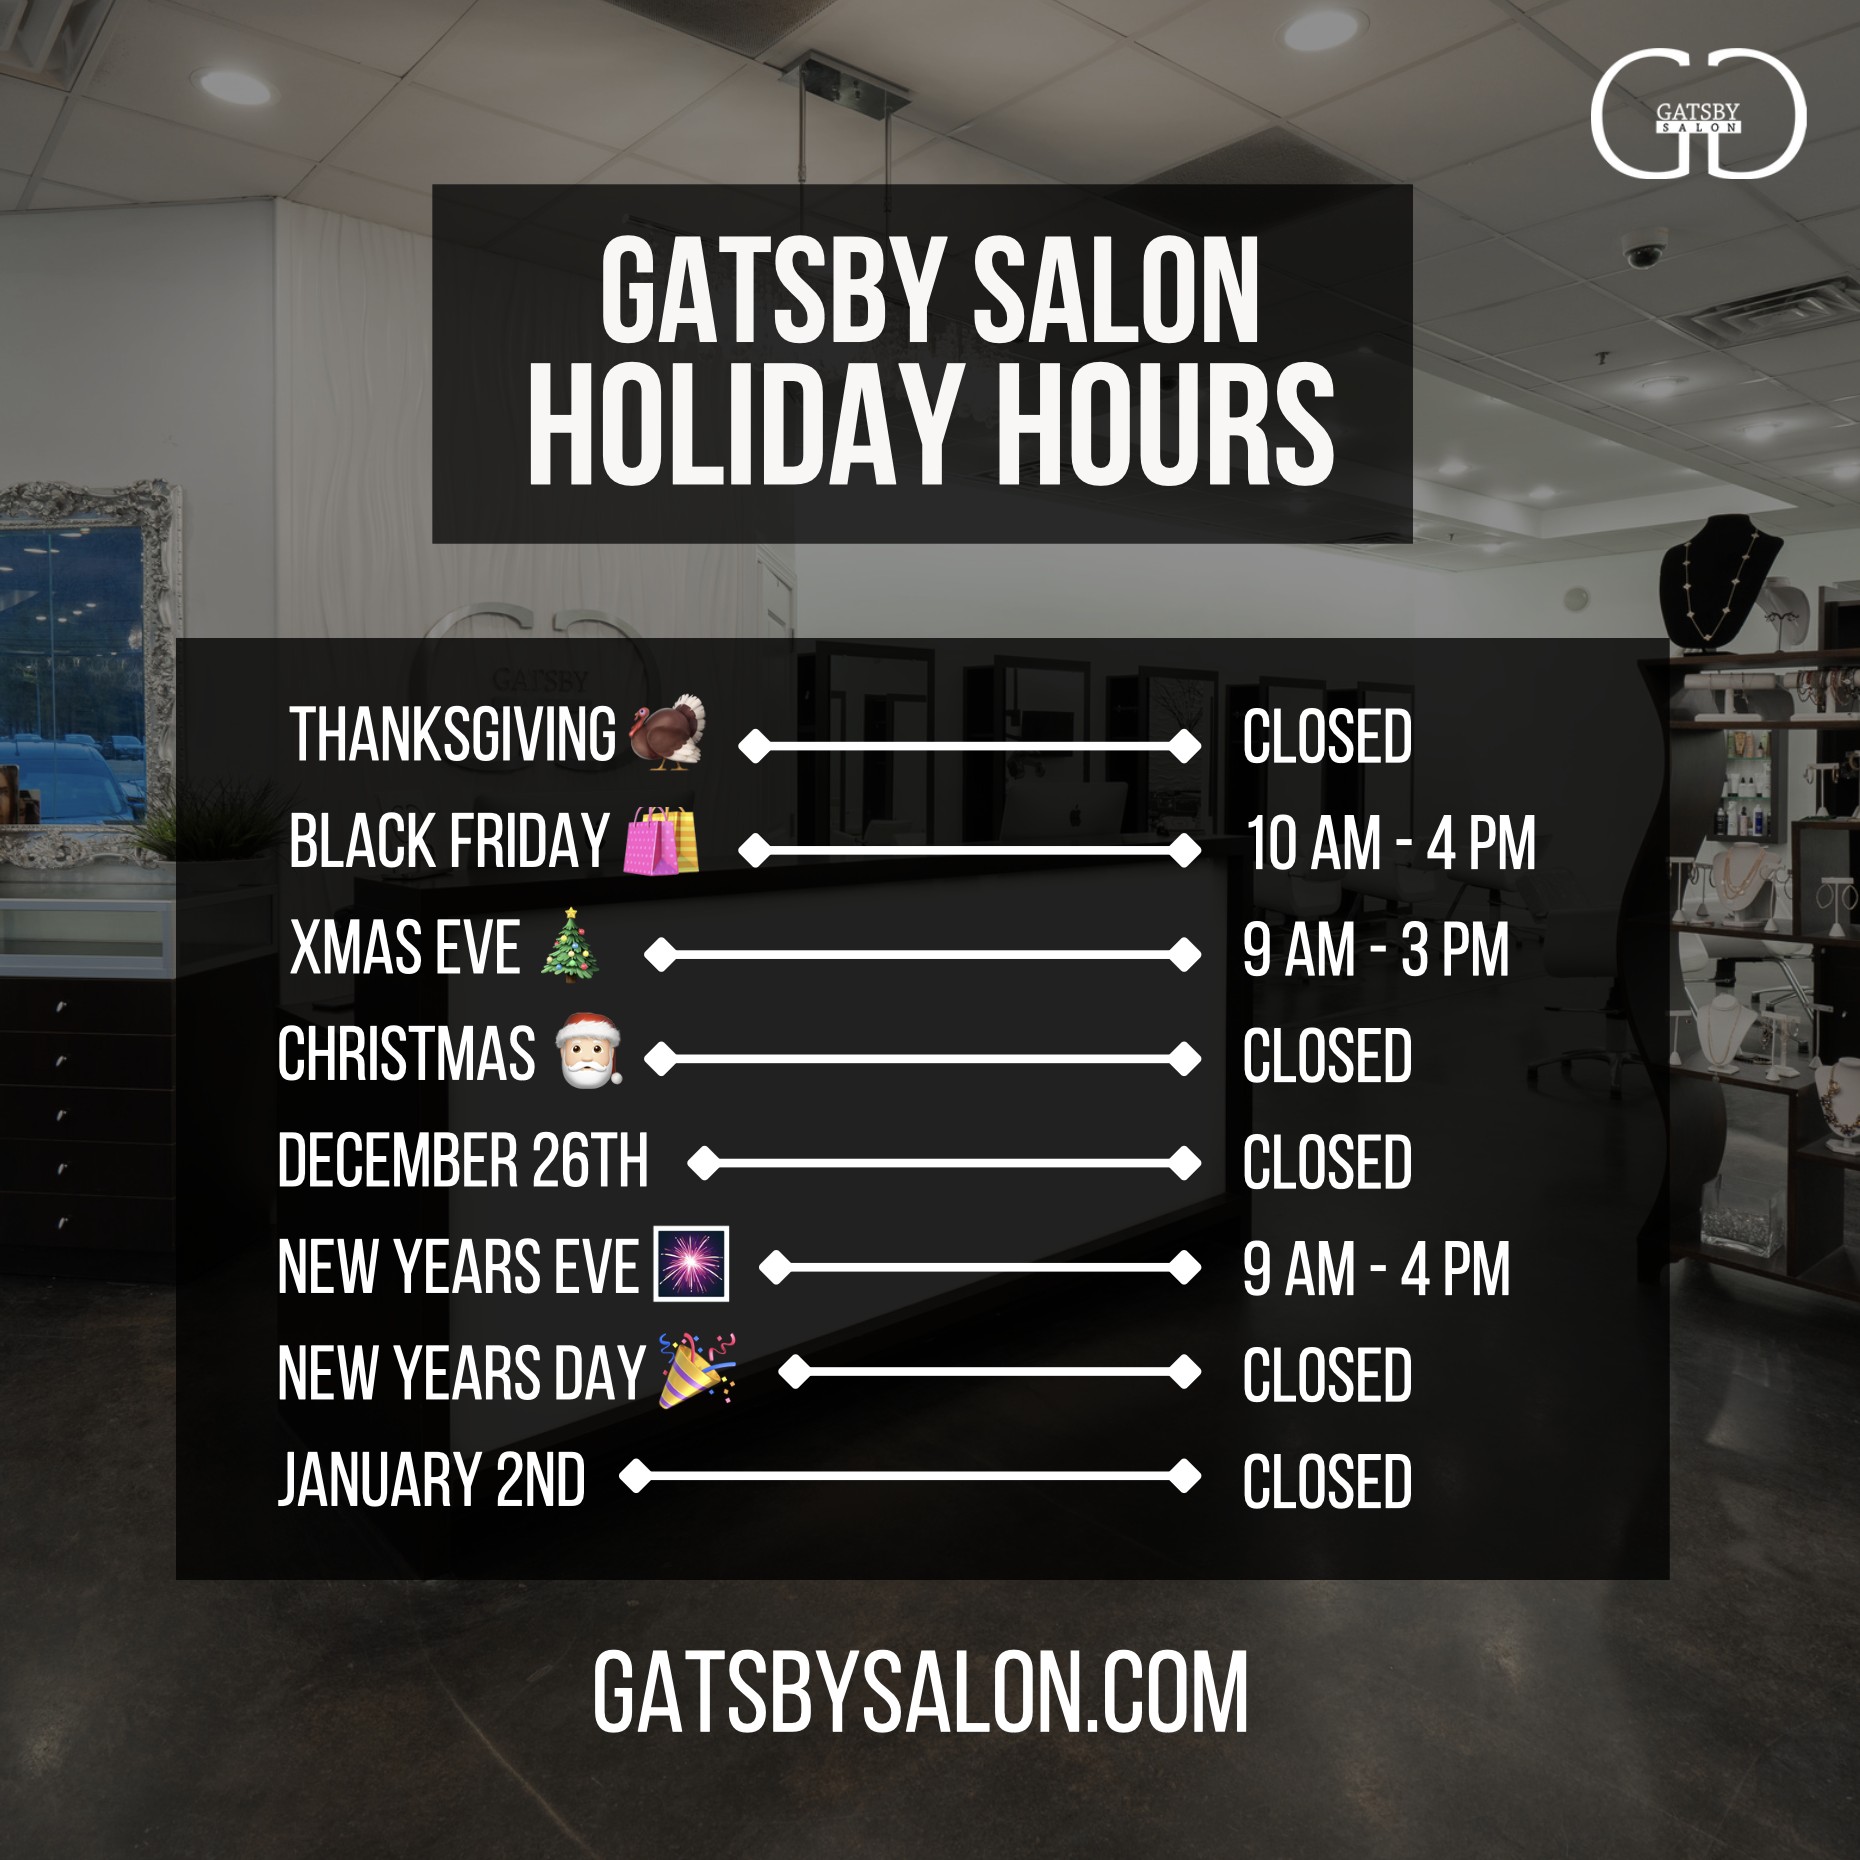 Gatsby Salon 215 US-22, Green Brook New Jersey 08812